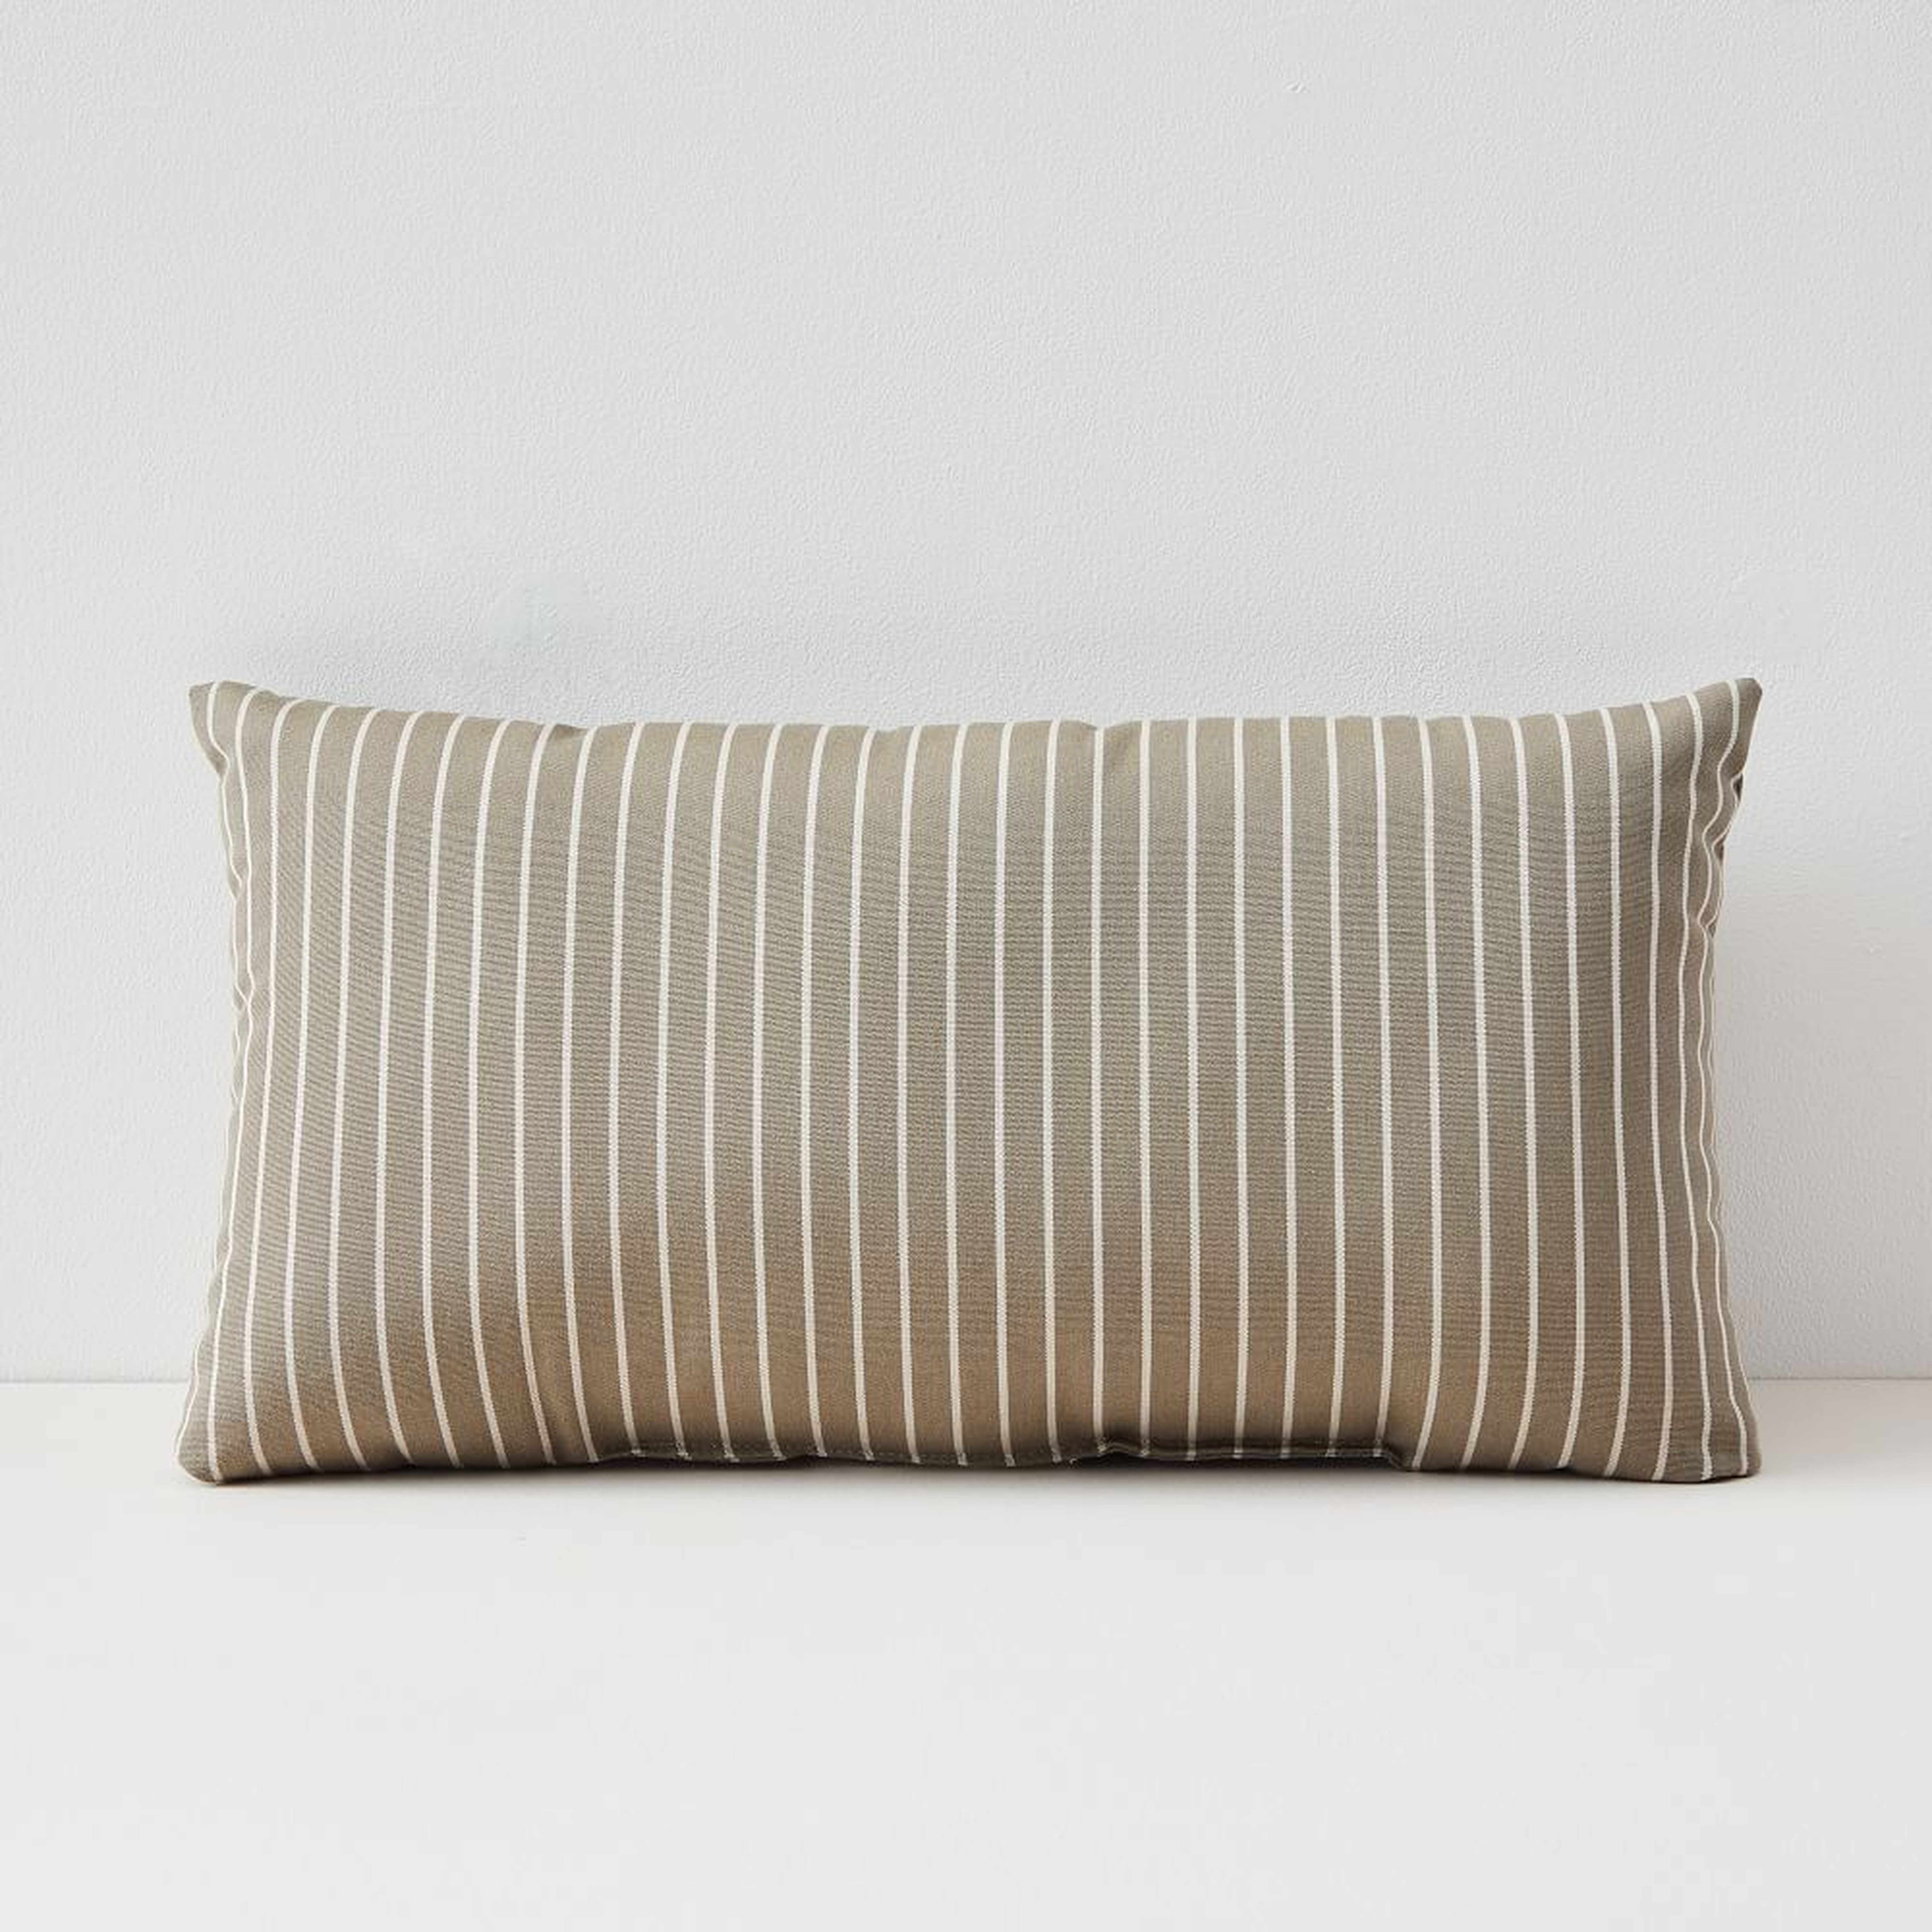 Sunbrella Indoor/Outdoor Striped Lumbar Pillow, Taupe, Set of 2, 12"x21" - West Elm